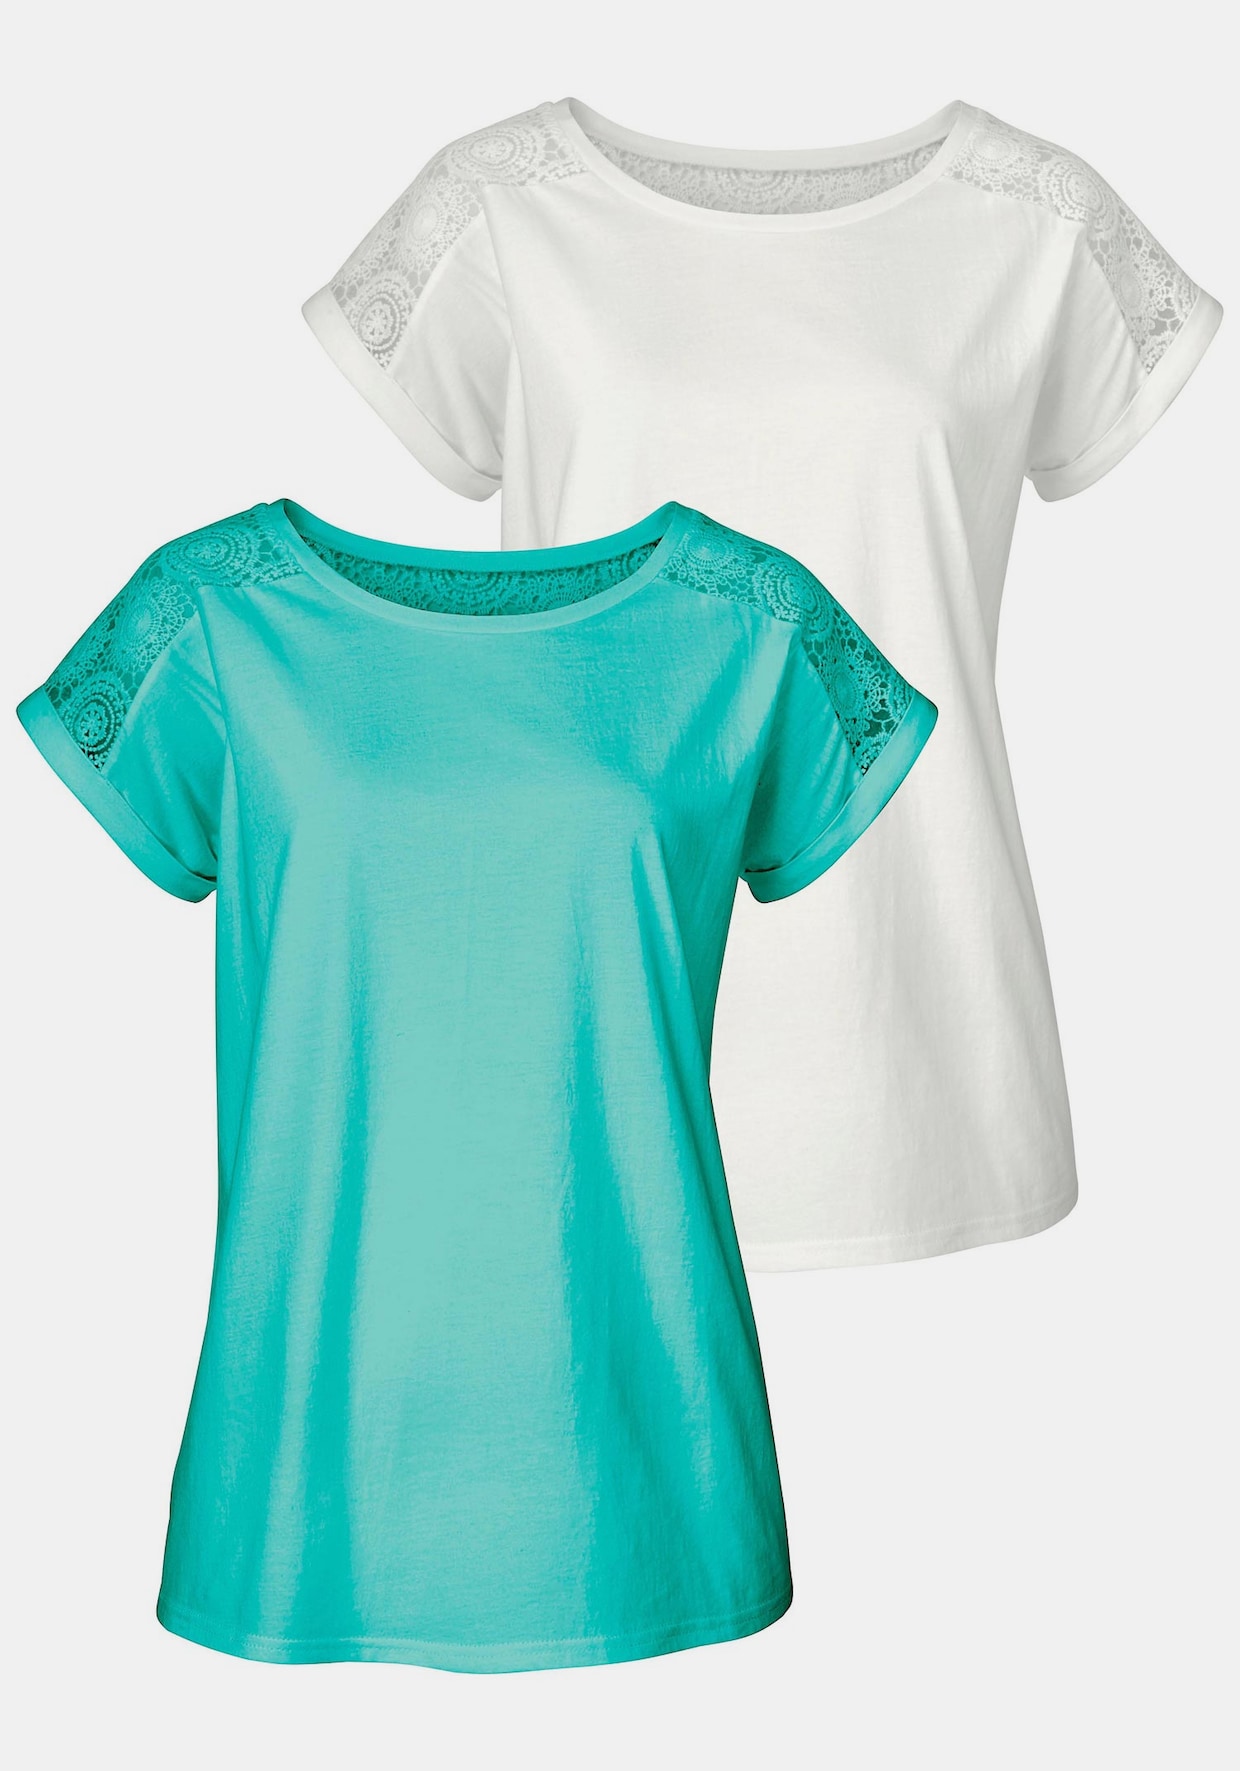 Vivance T-Shirt - 1x mint + 1x creme